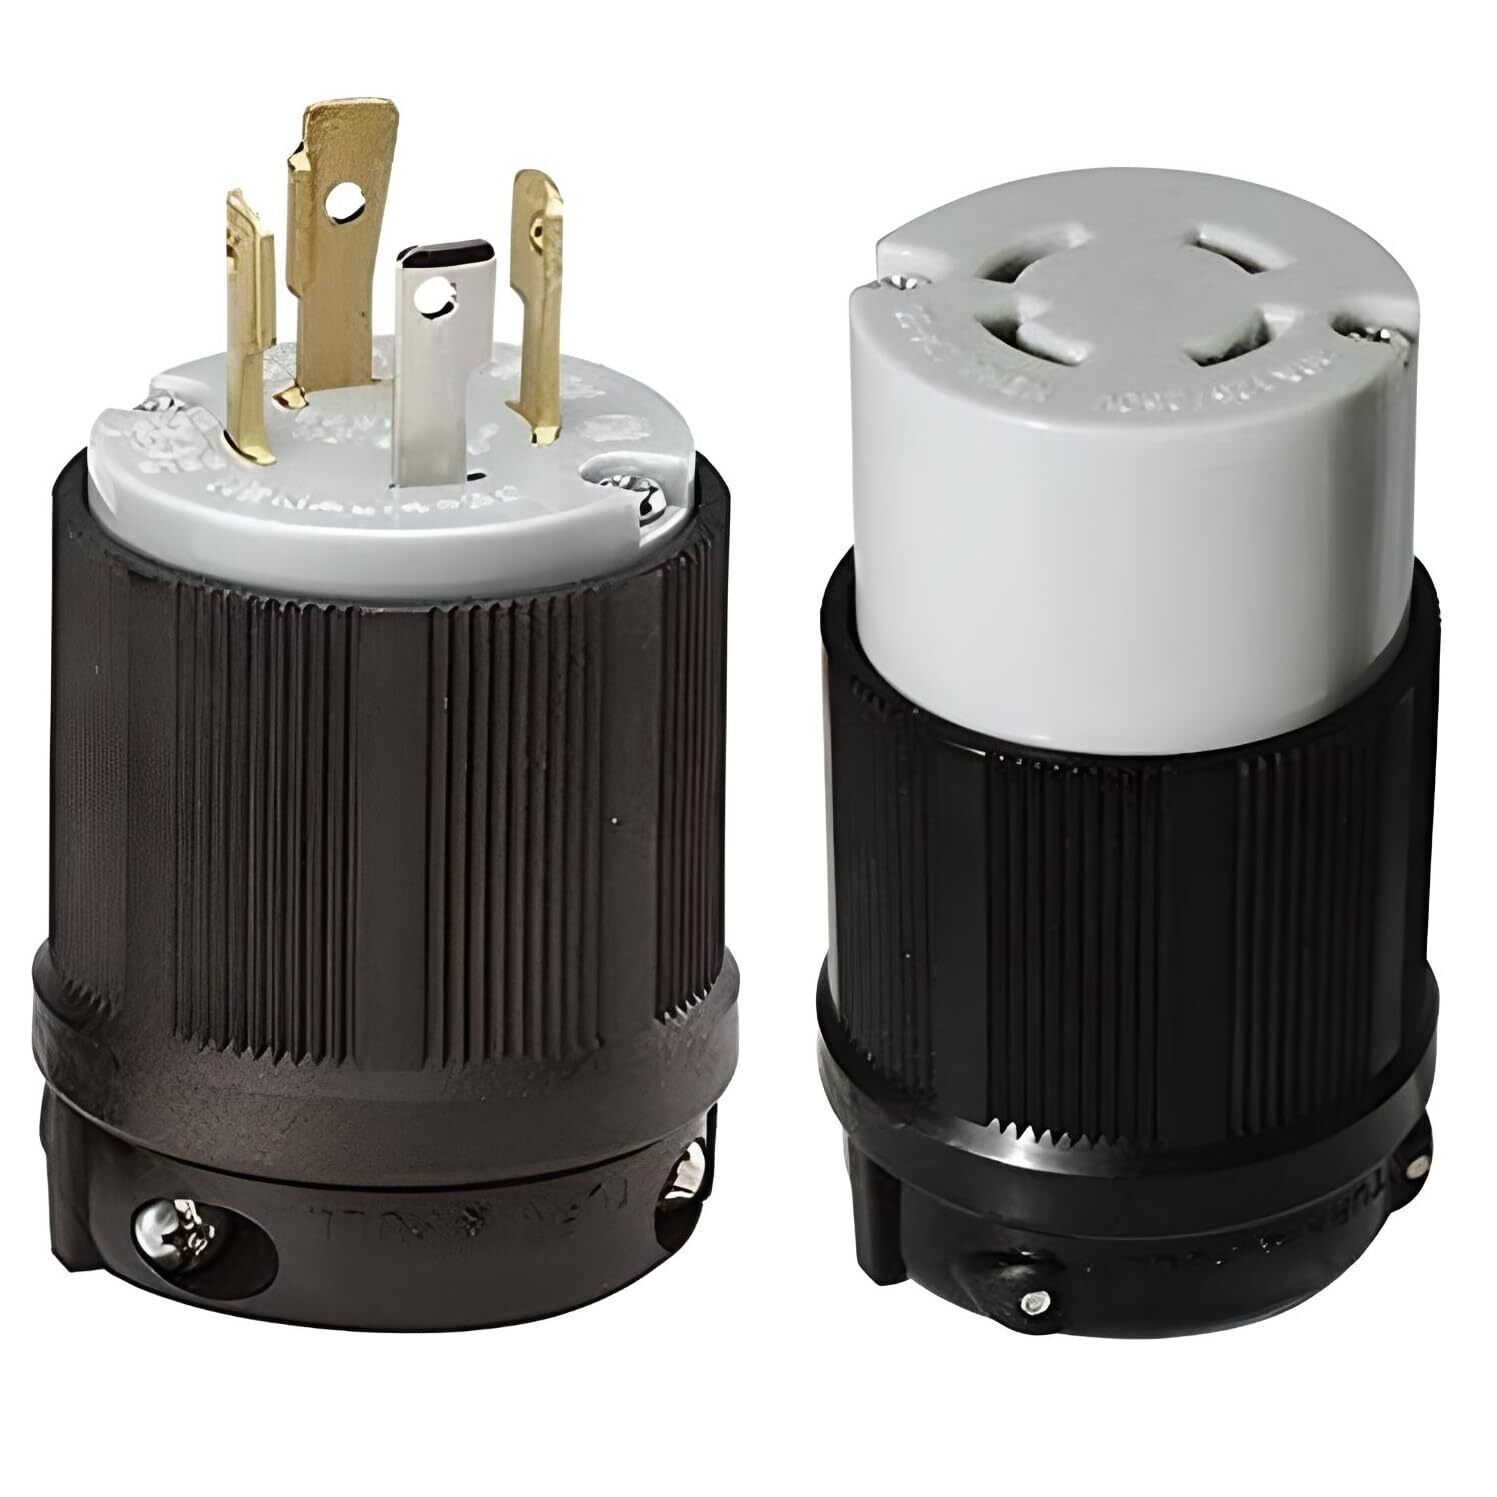 NEMA L14-30 Locking Plug and Connector |125/250 Volt - 30 Amp - 3 Pole 4 Wire